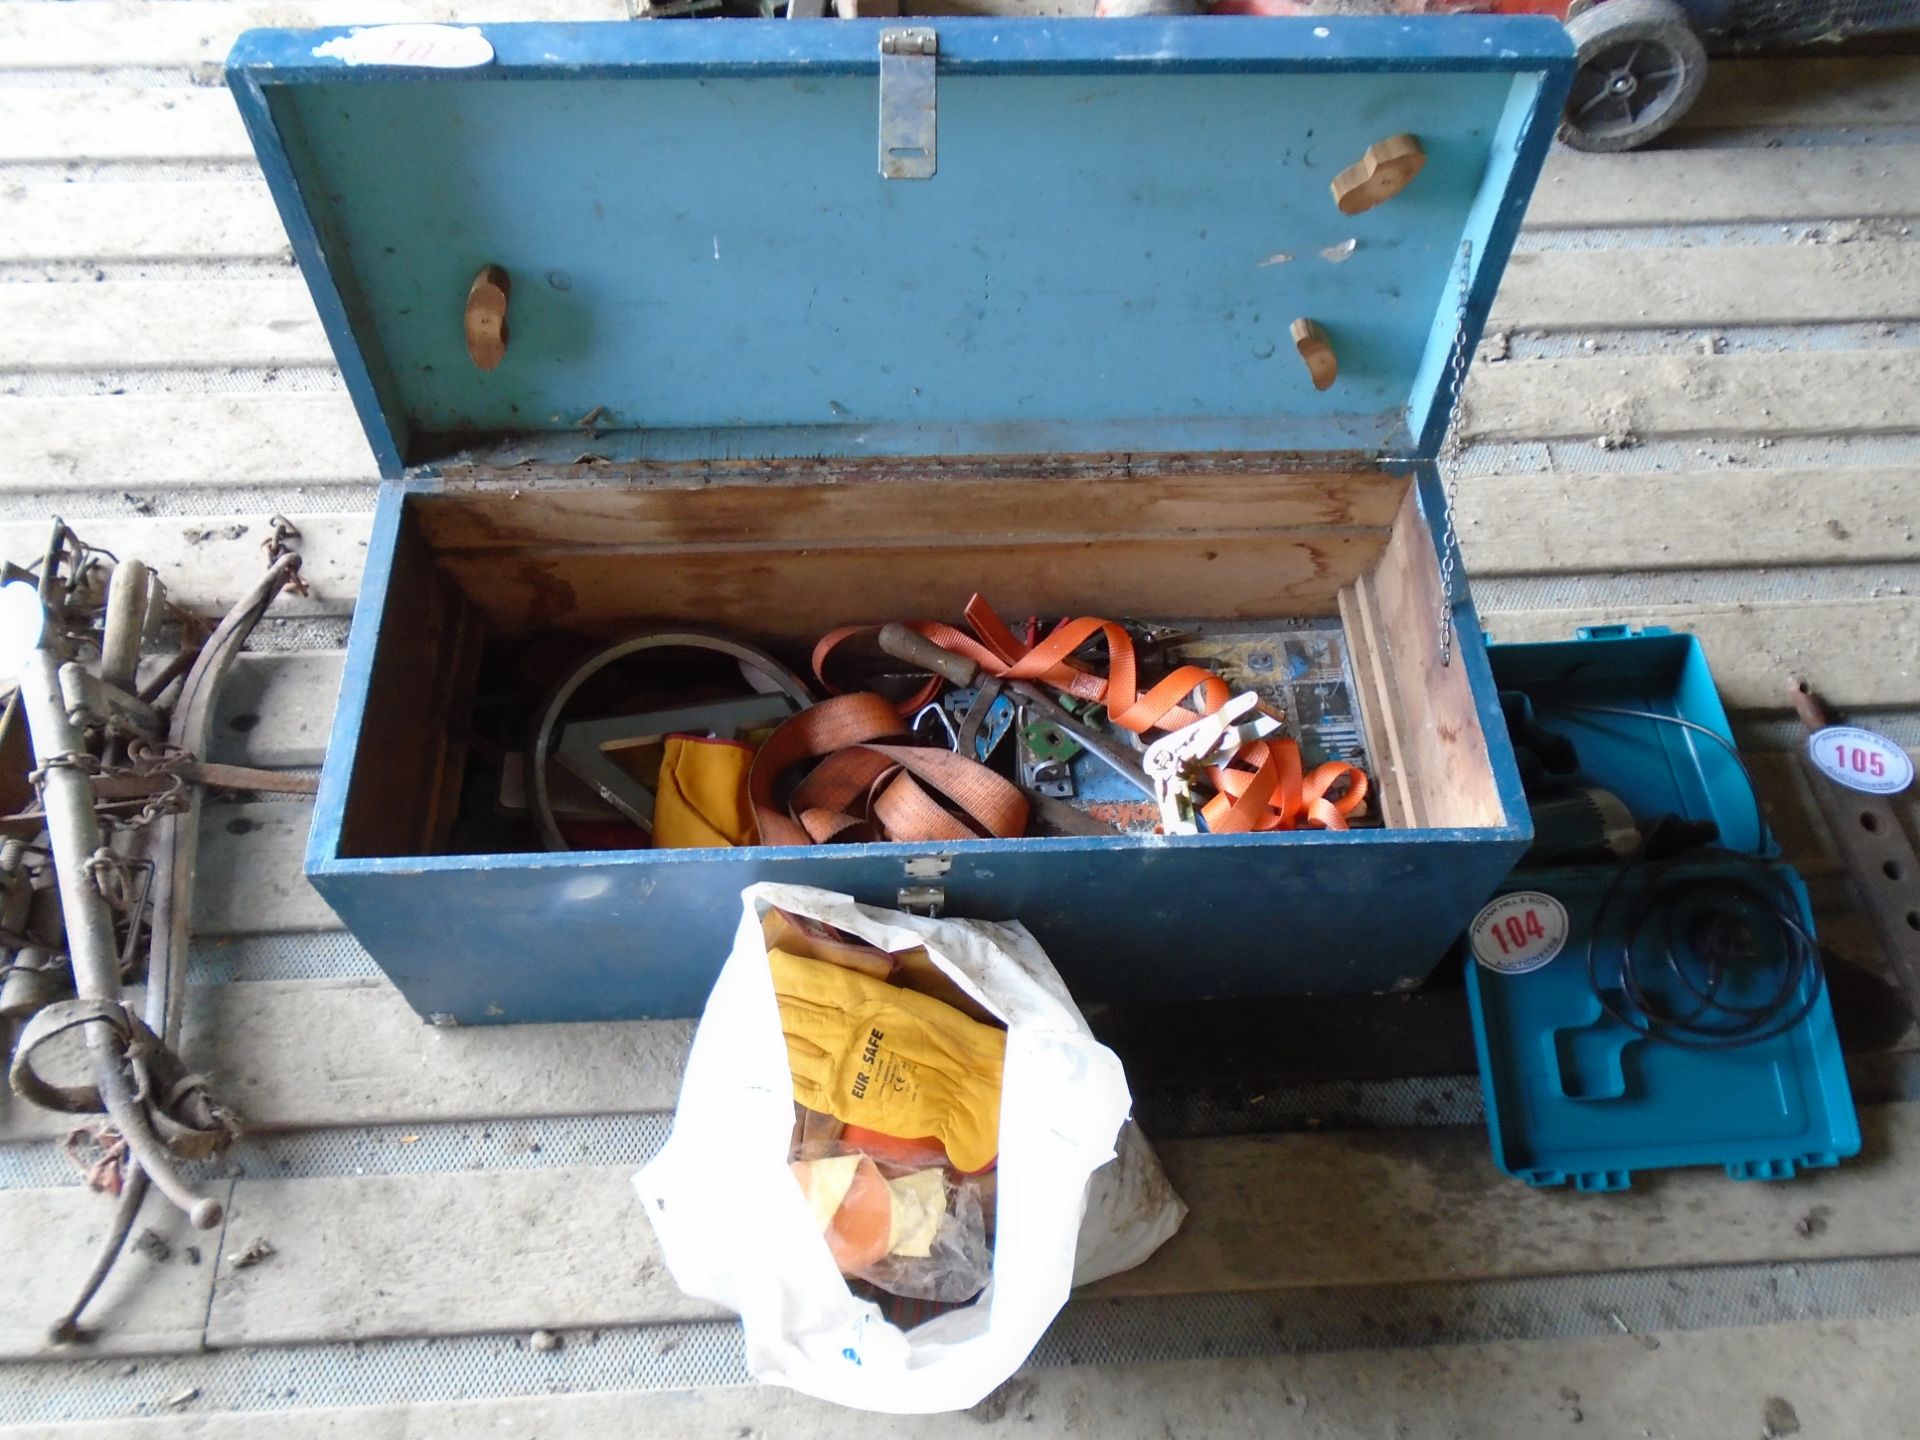 Box of ratchet straps, drill, gloves etc